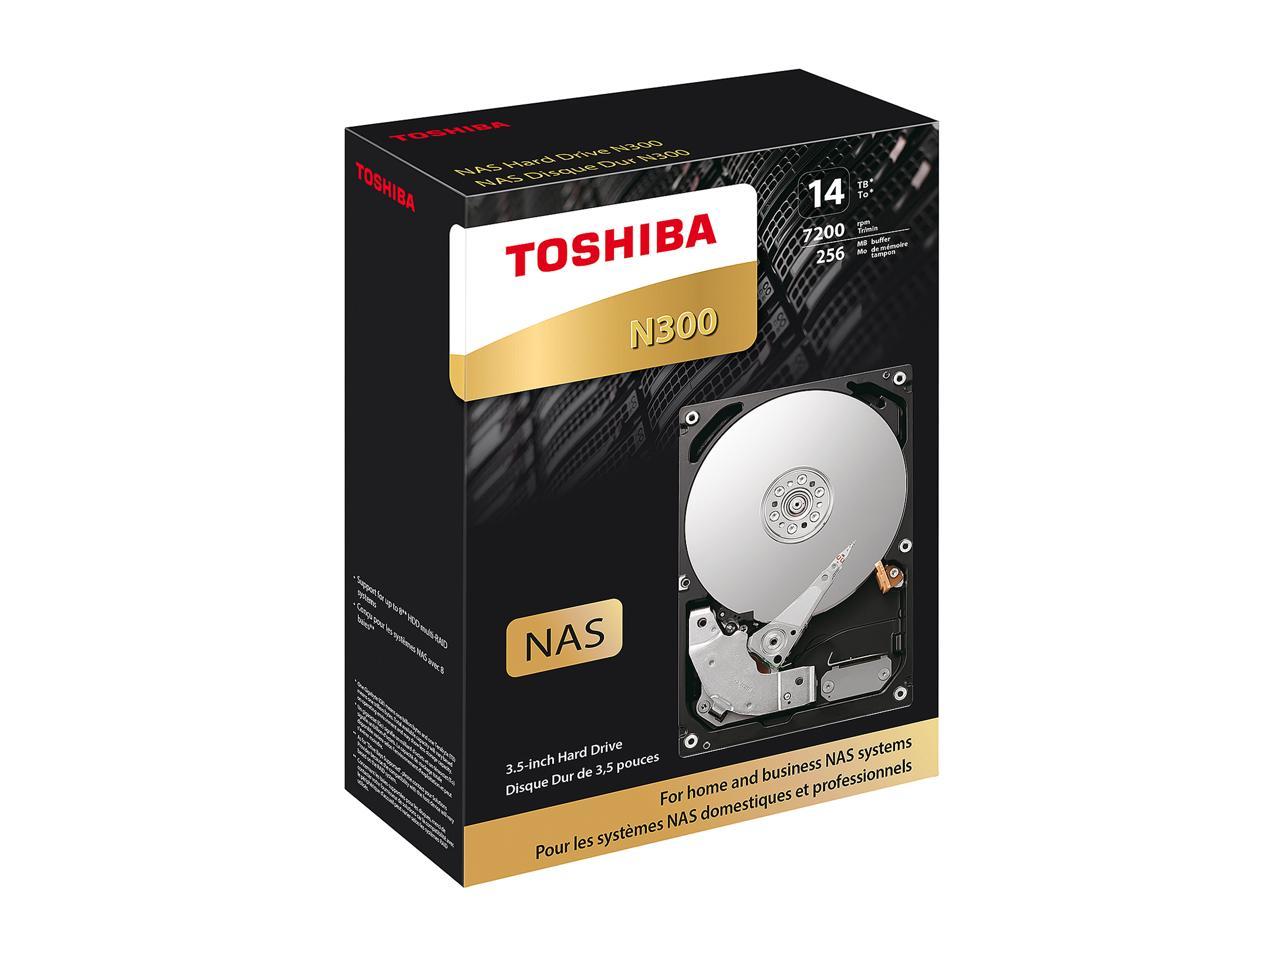 Toshiba N300 Hdwg21Exzsta 14Tb 7200 Rpm 256Mb Cache Sata 6.0Gb/S 3.5" Internal Hard Drive